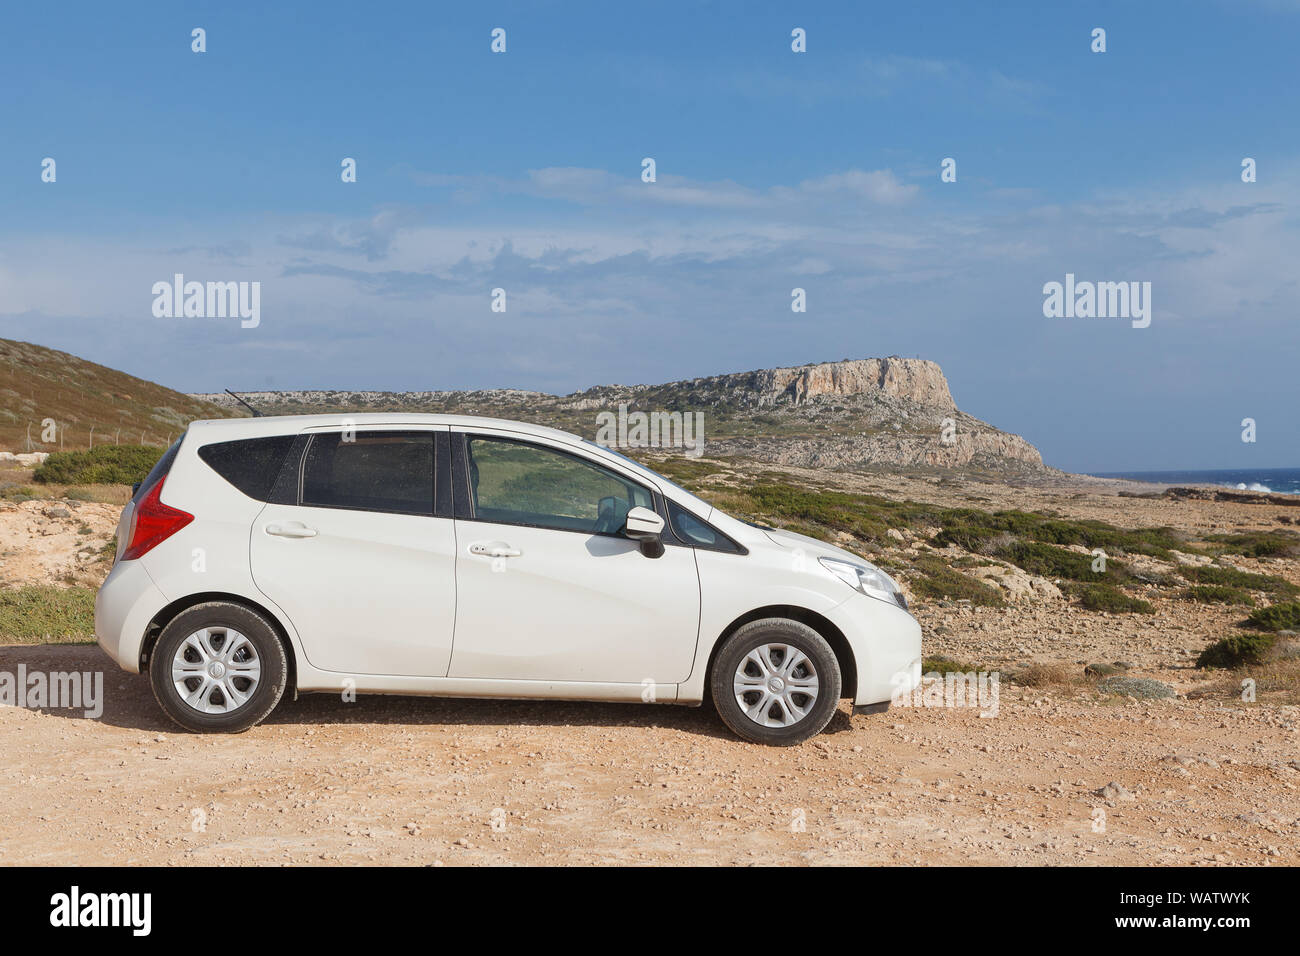 White economy car explores Cyprus offroad destinations Stock Photo - Alamy